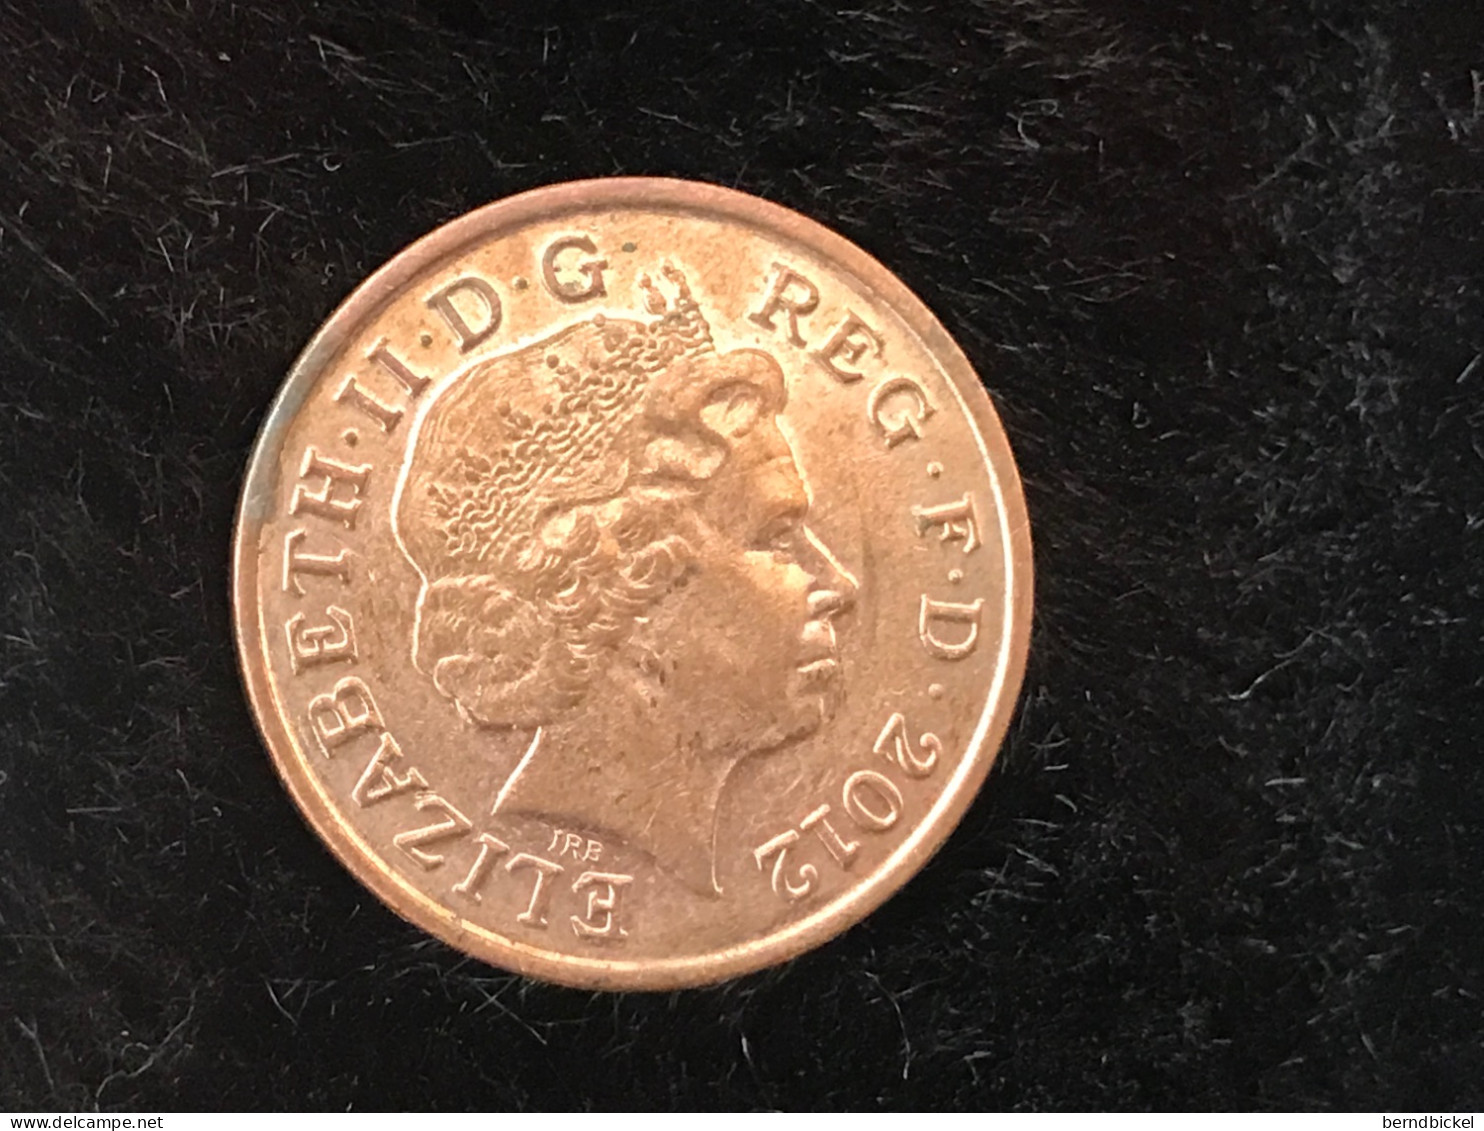 Münze Münzen Umlaufmünze Großbritannien 2 Pence 2012 - 2 Pence & 2 New Pence